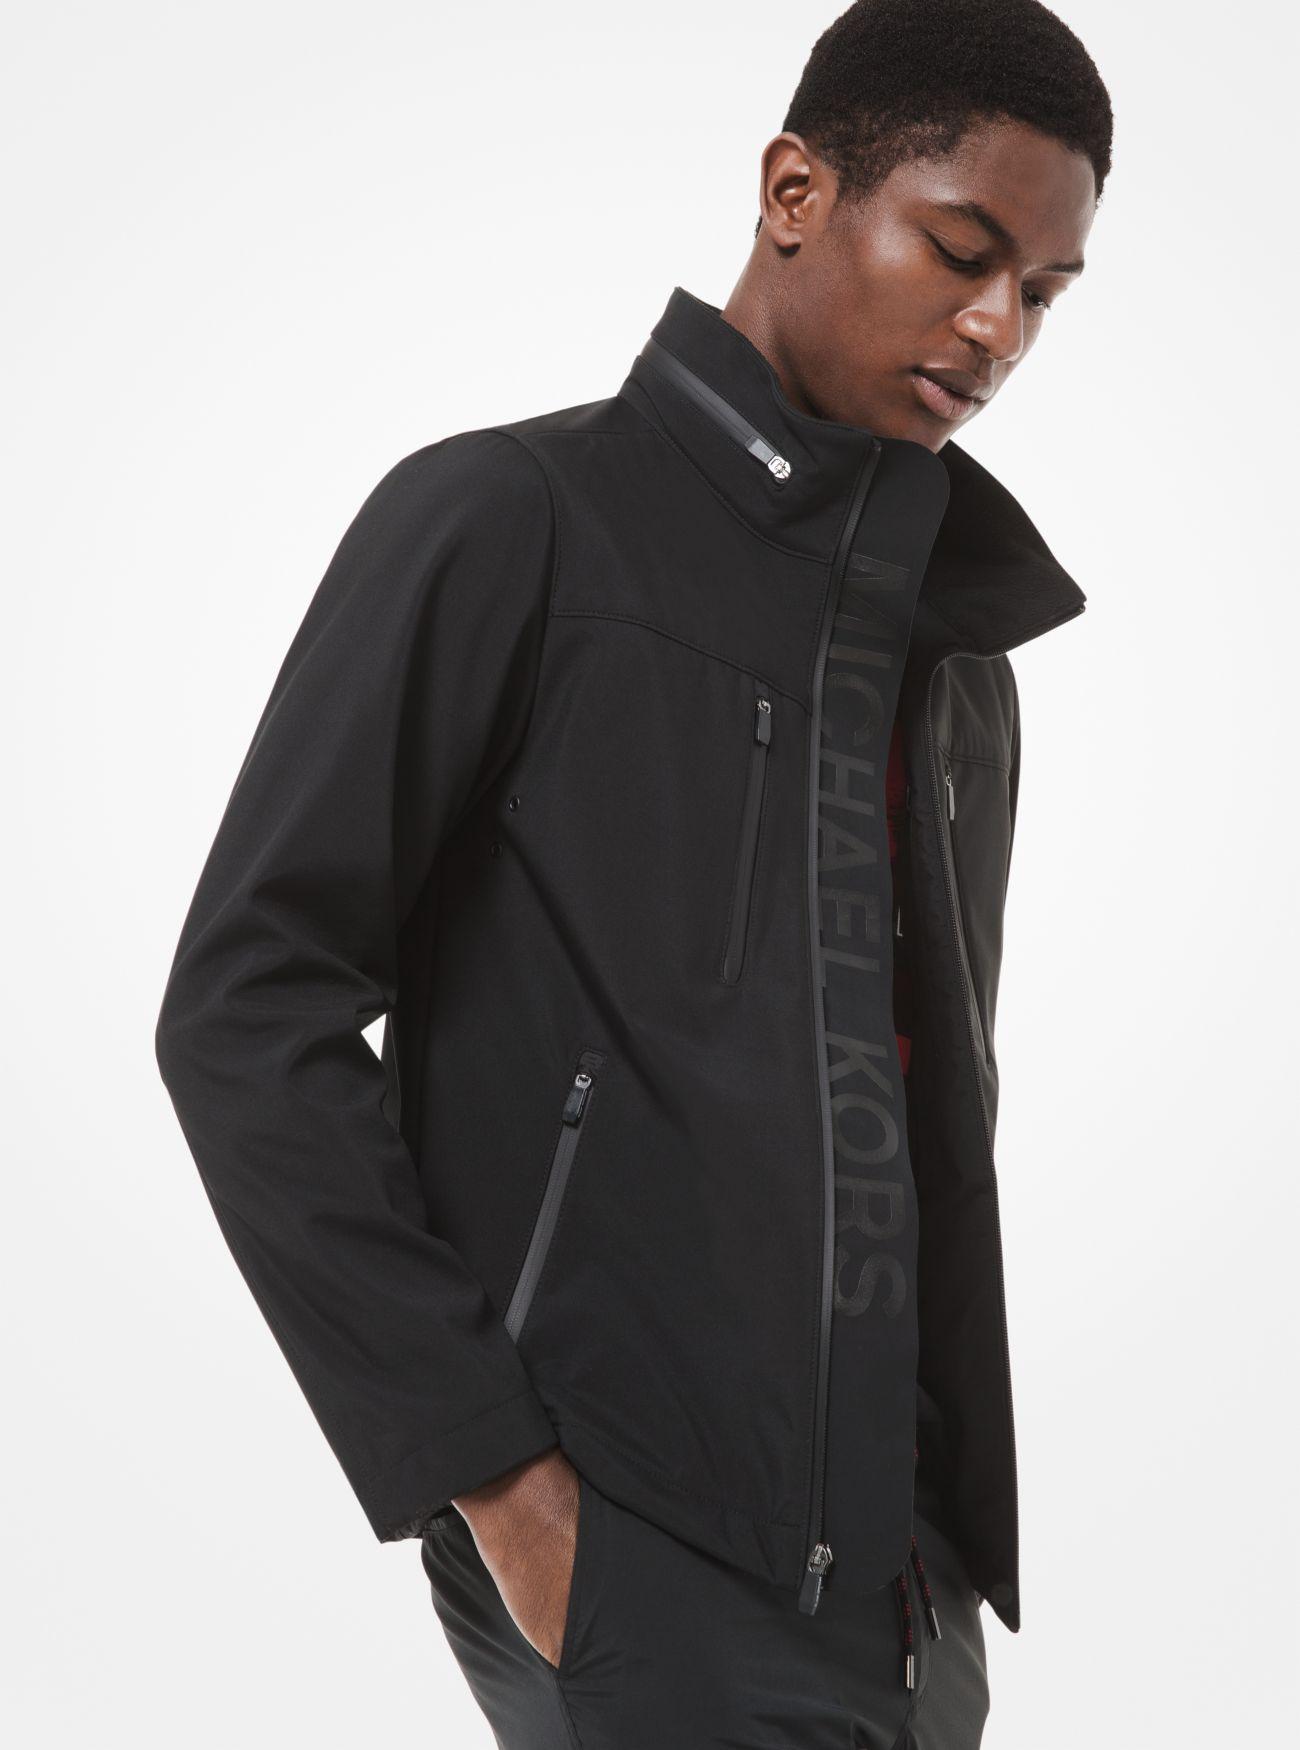 Shining Udvalg Blive kold Michael Kors Fleece Kors X Tech Jacket in Black for Men - Lyst